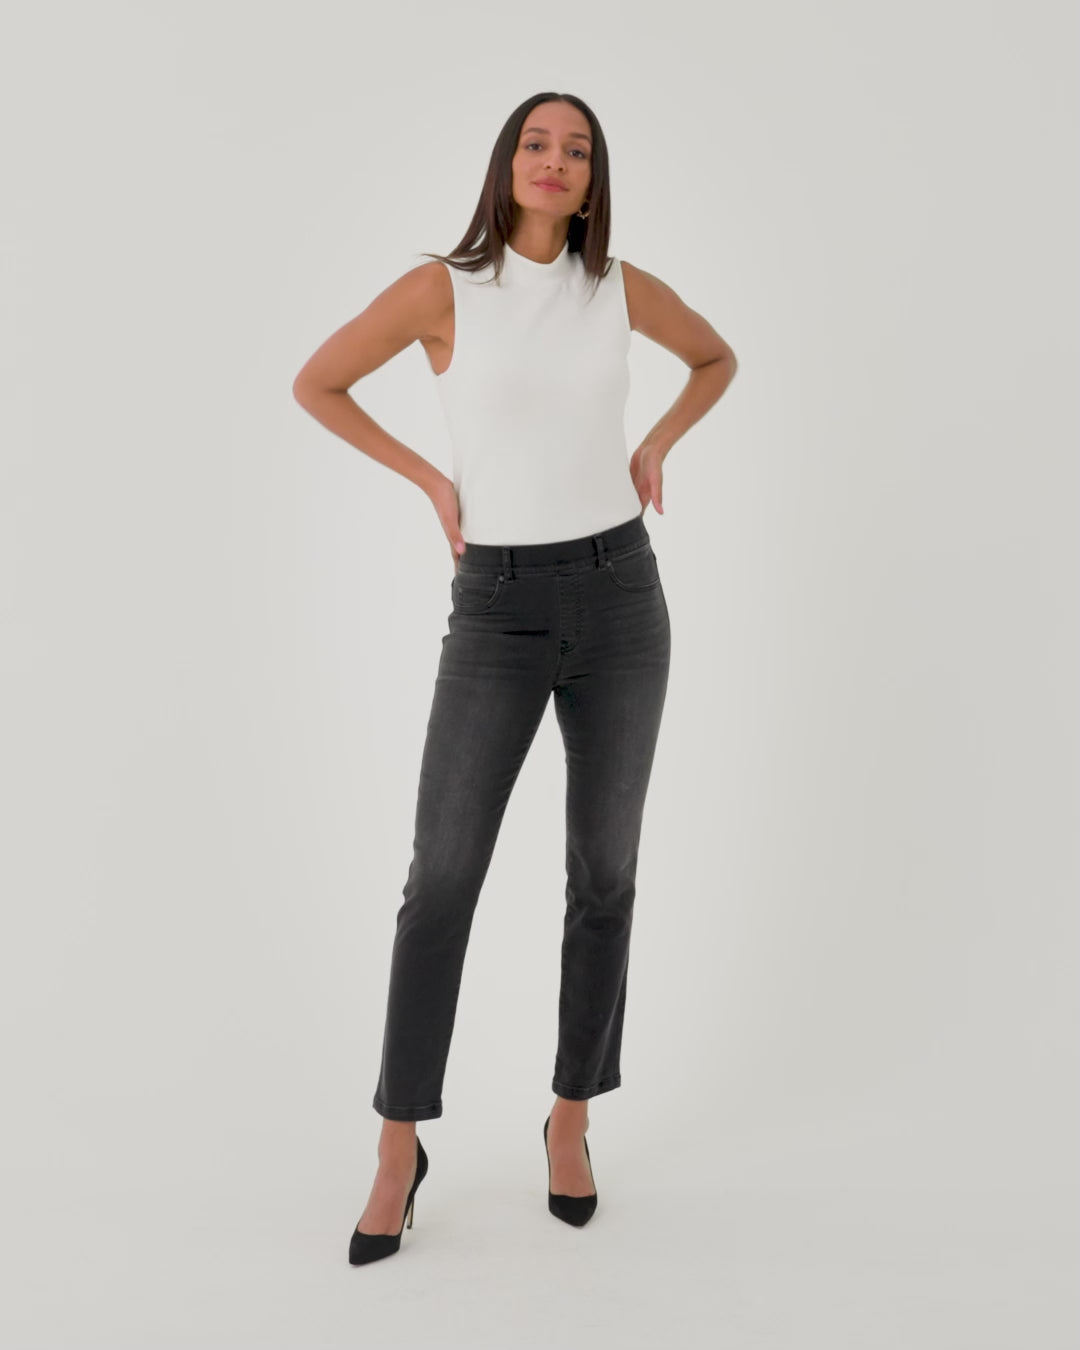 SPANX, Pants & Jumpsuits, Spanx The Perfect Pant Slim Straight Black  Legging Ponte Pants Size 3x Nwot